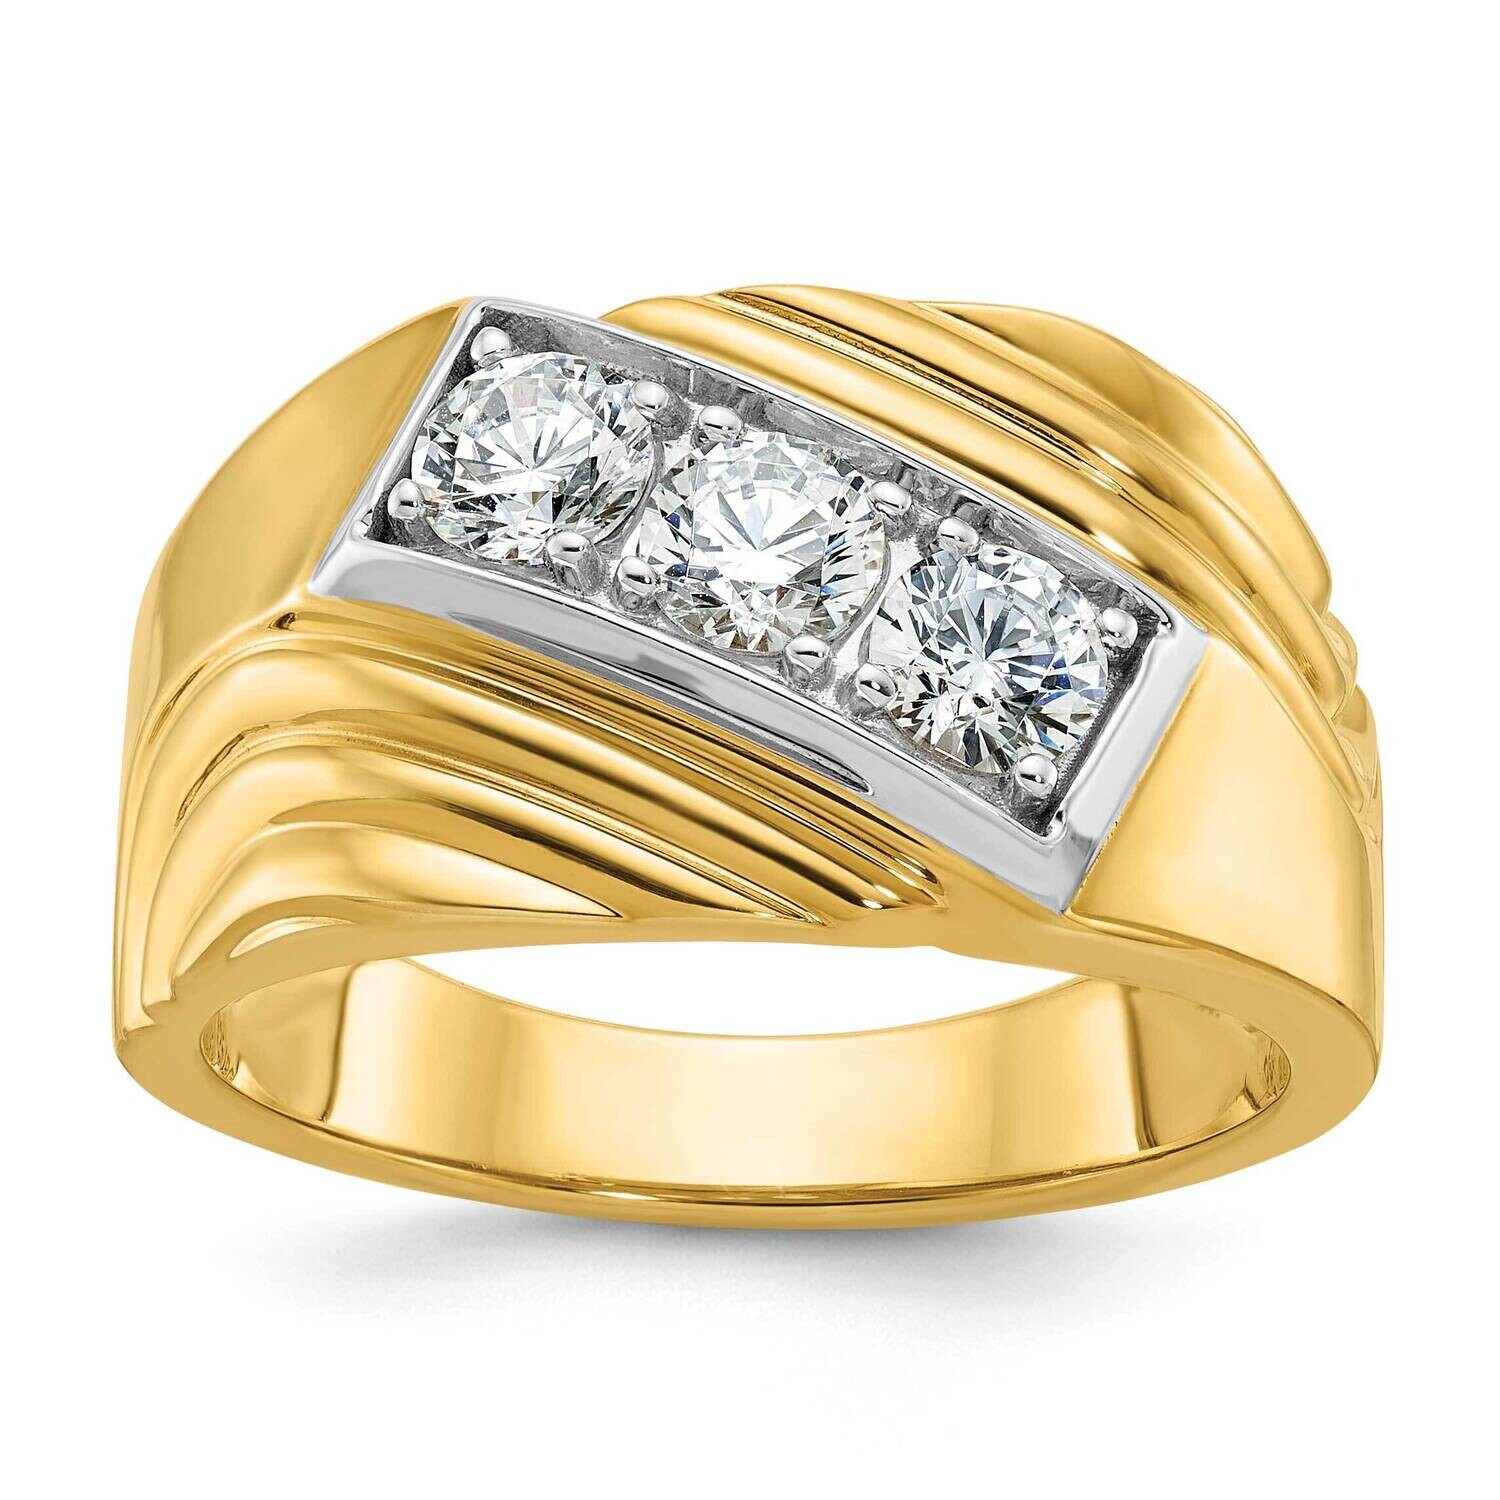 Ibgoodman Men's Polished Grooved 3-Stone Ring Mounting 14k Gold B59347-4Y